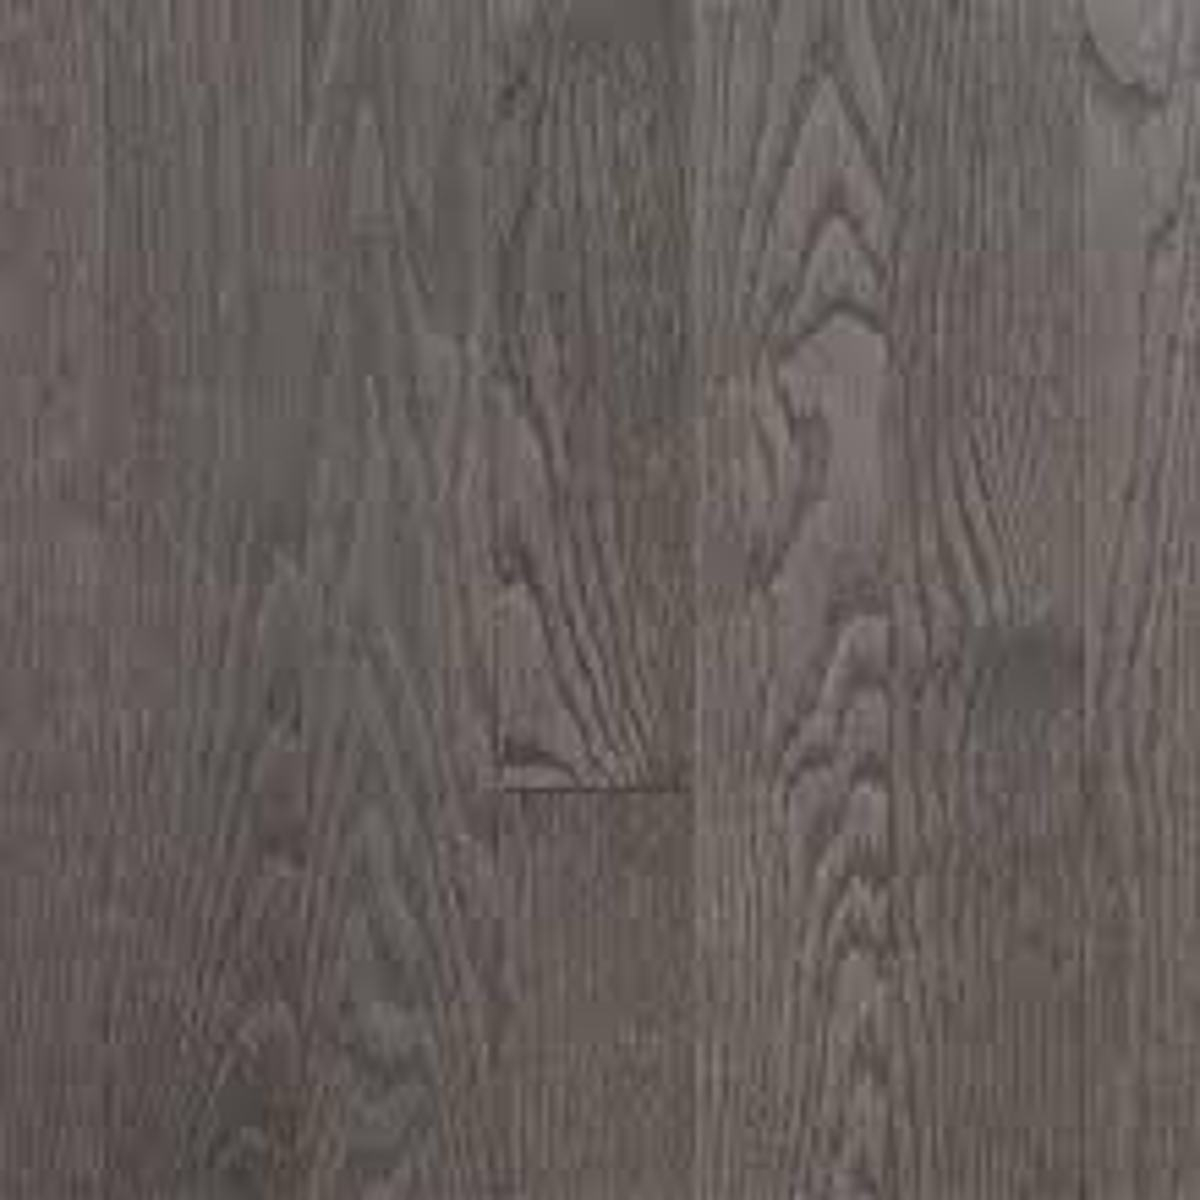 Edison Red Oak Solid Hardwood Flooring, Hardwood Flooring Oceanside Ca